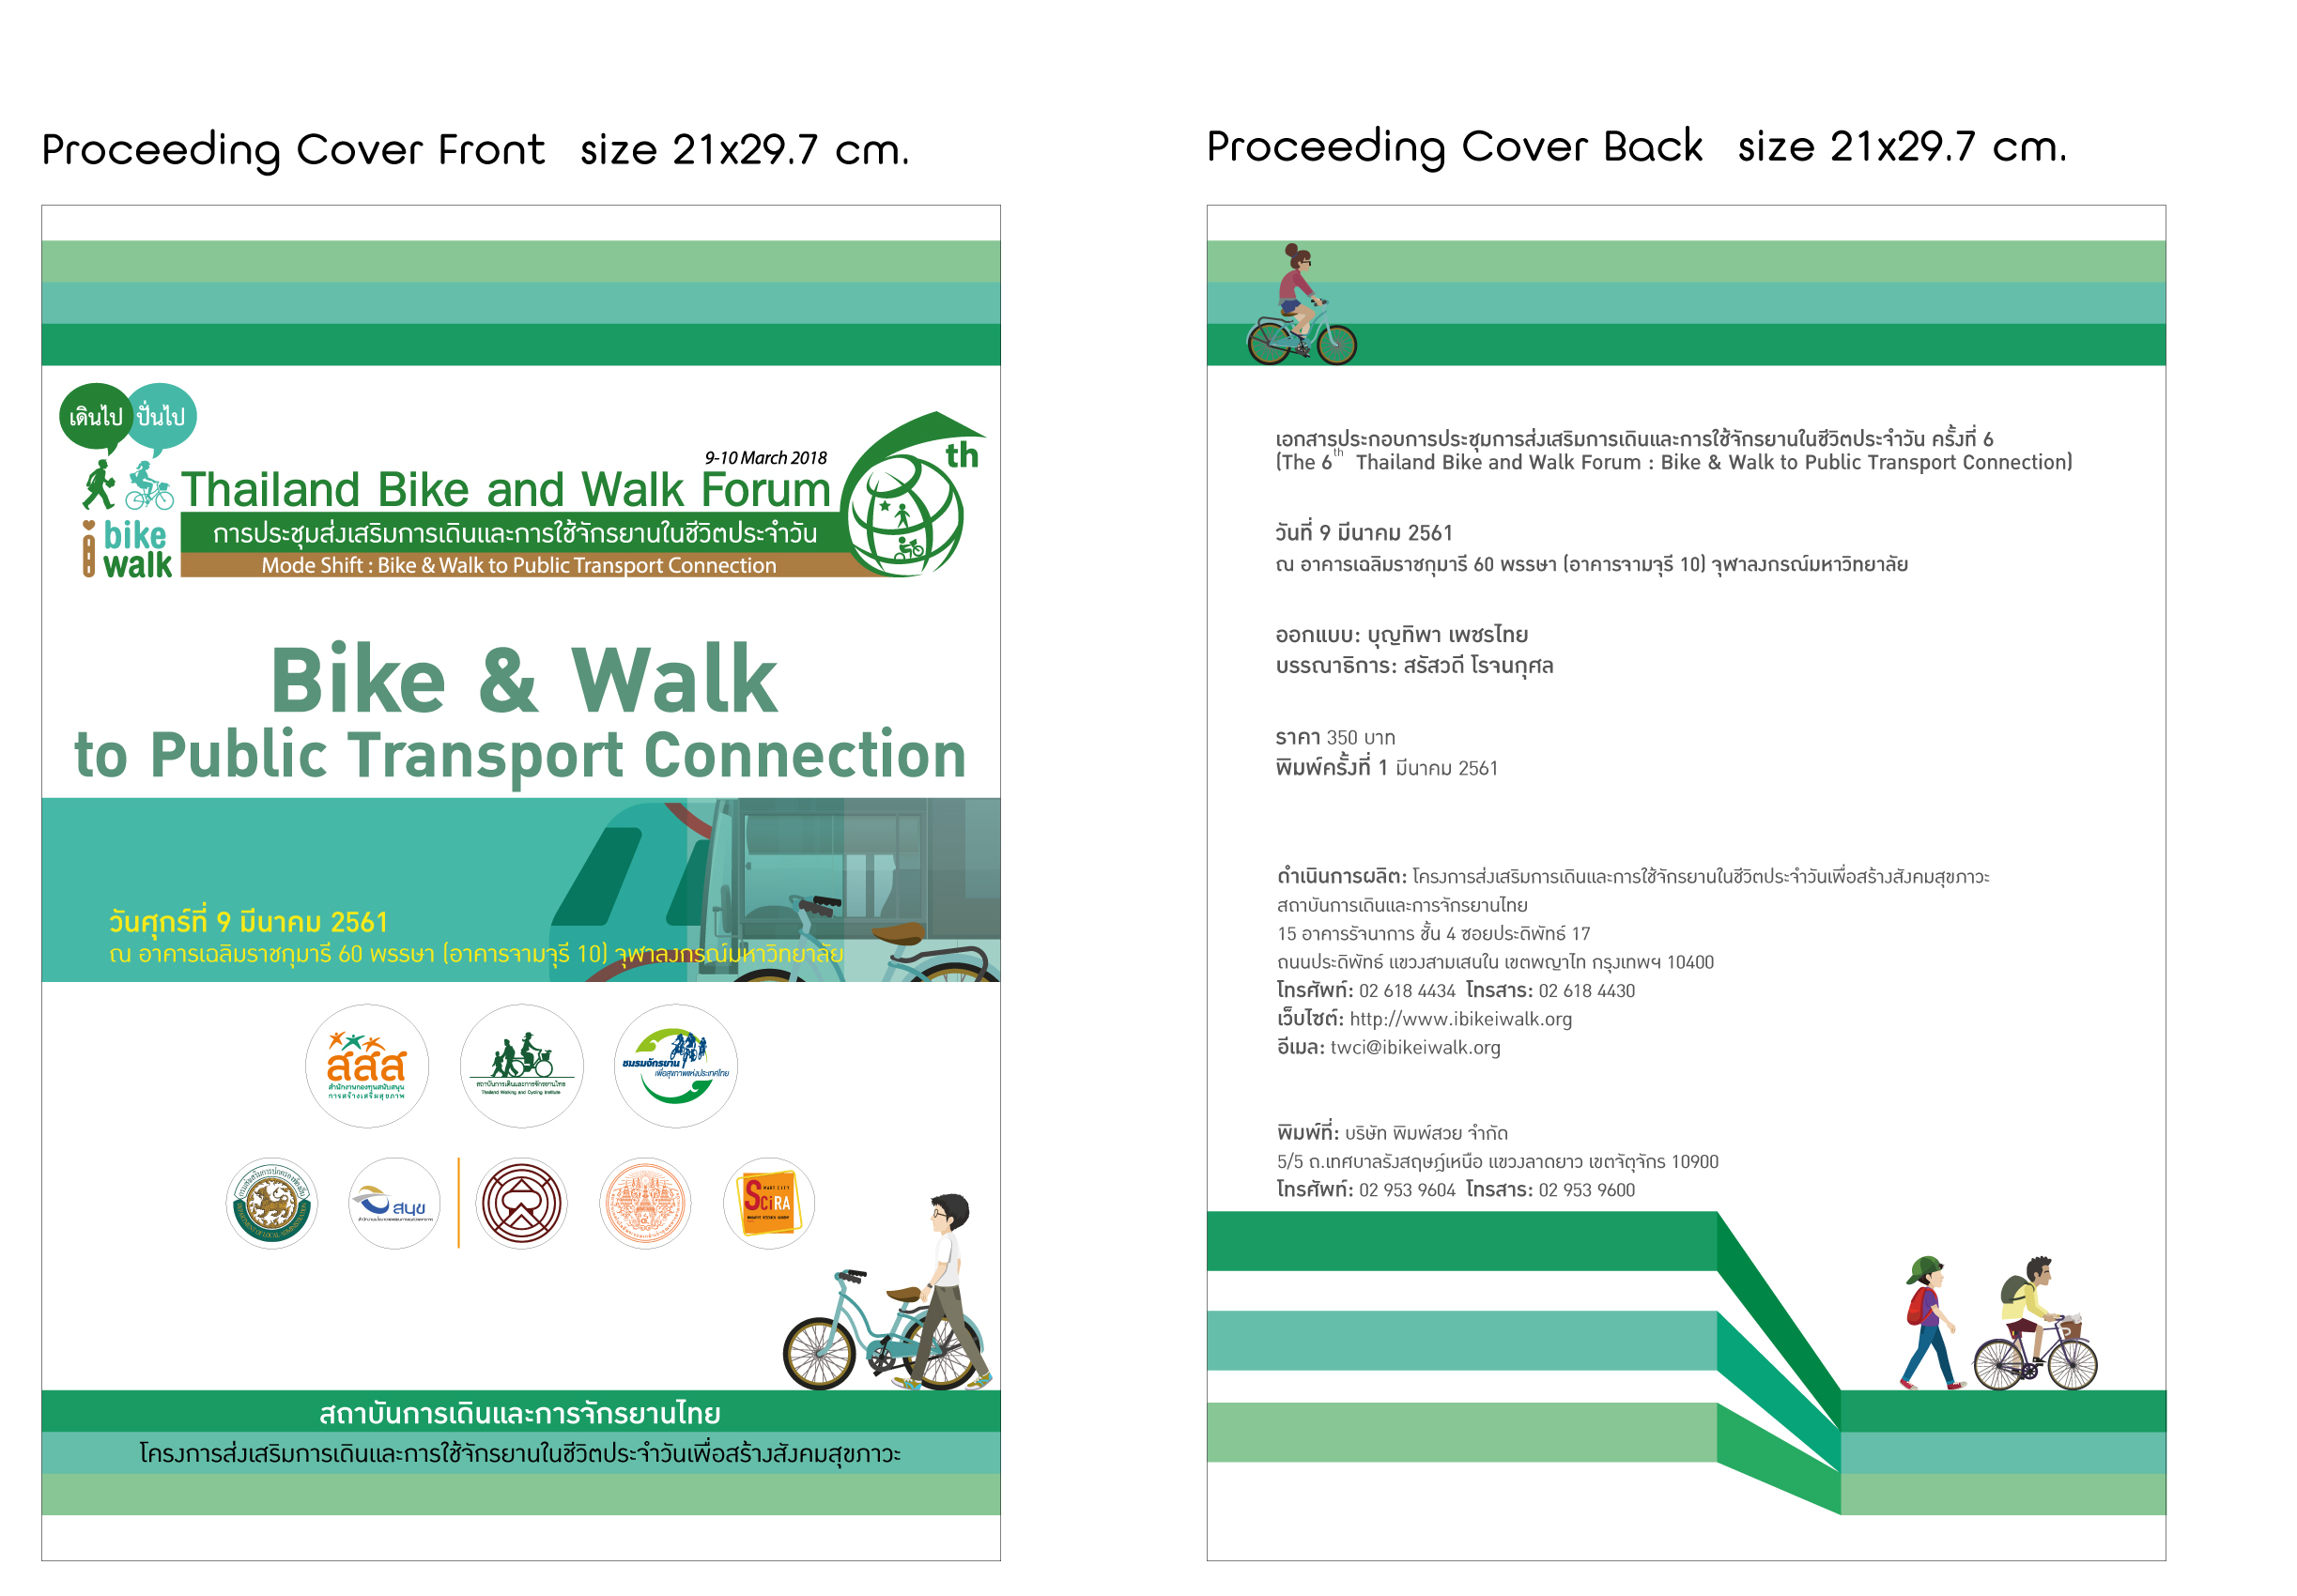 Proceeding Bike & Walk Forum to Public Transport Connection